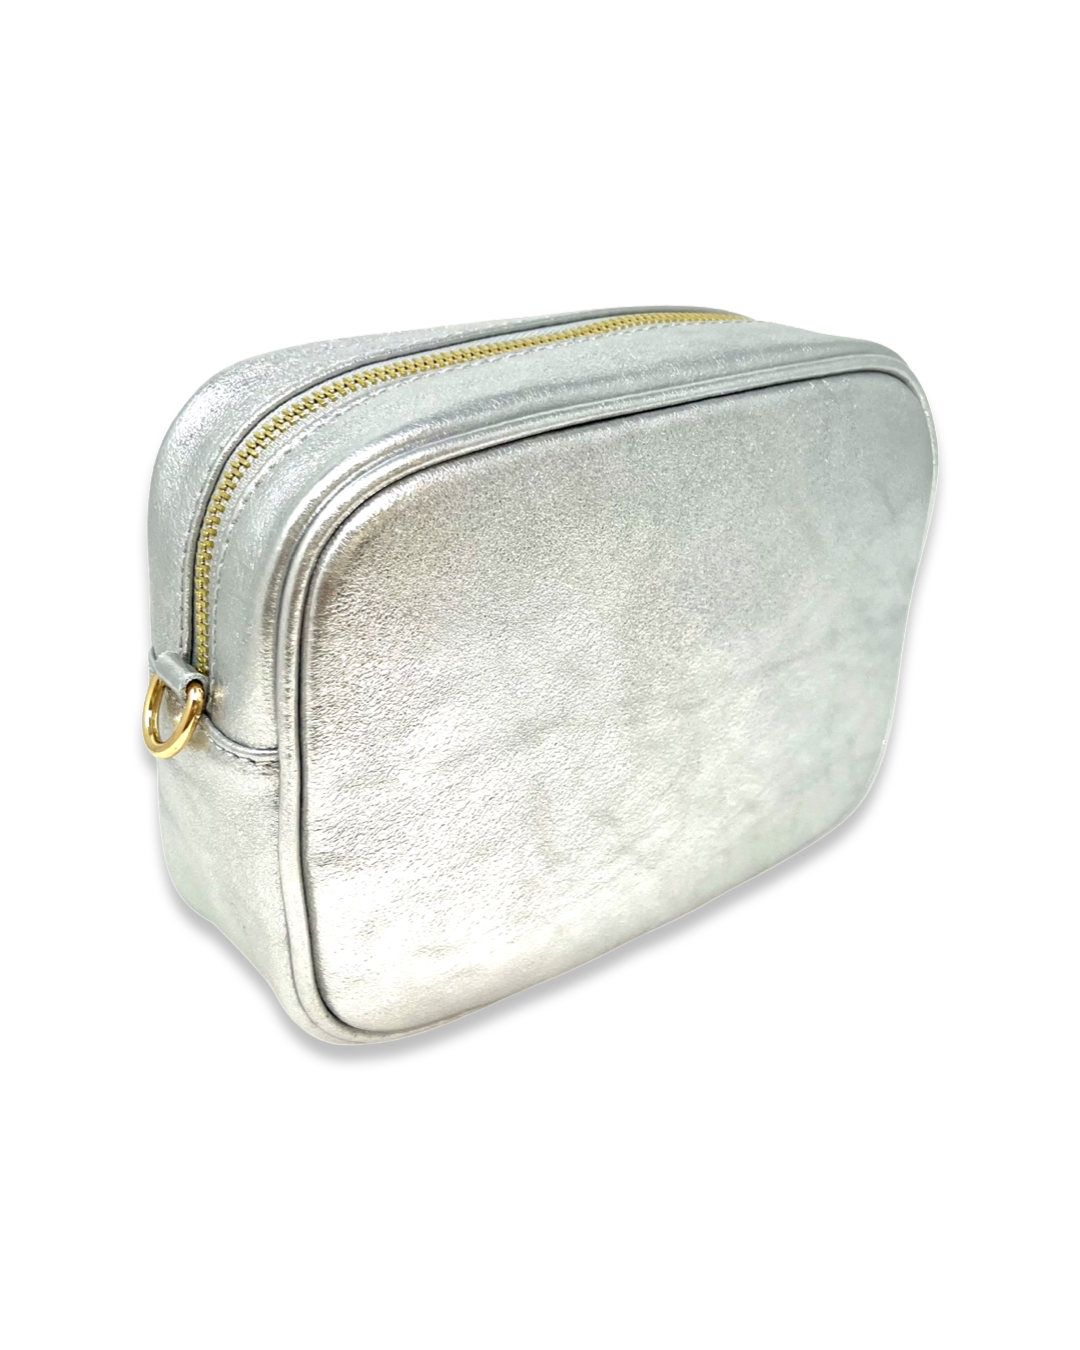 Firenze Bag in Metallic Silver